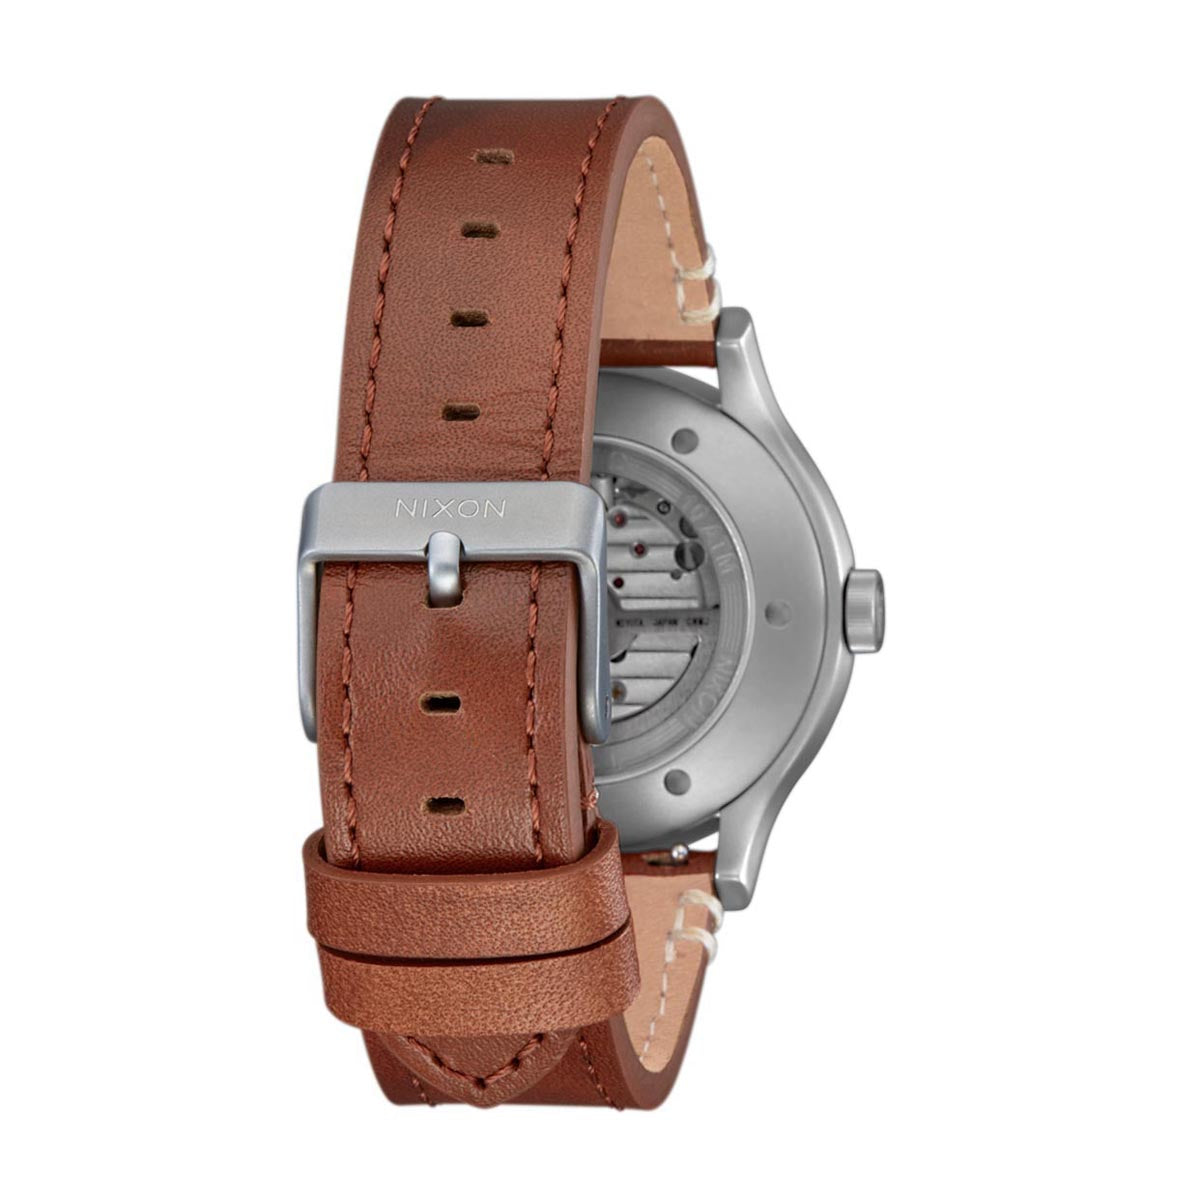 Nixon Spectra Leather Watch - Light Gunmetal/Basalt/Sienna image 3